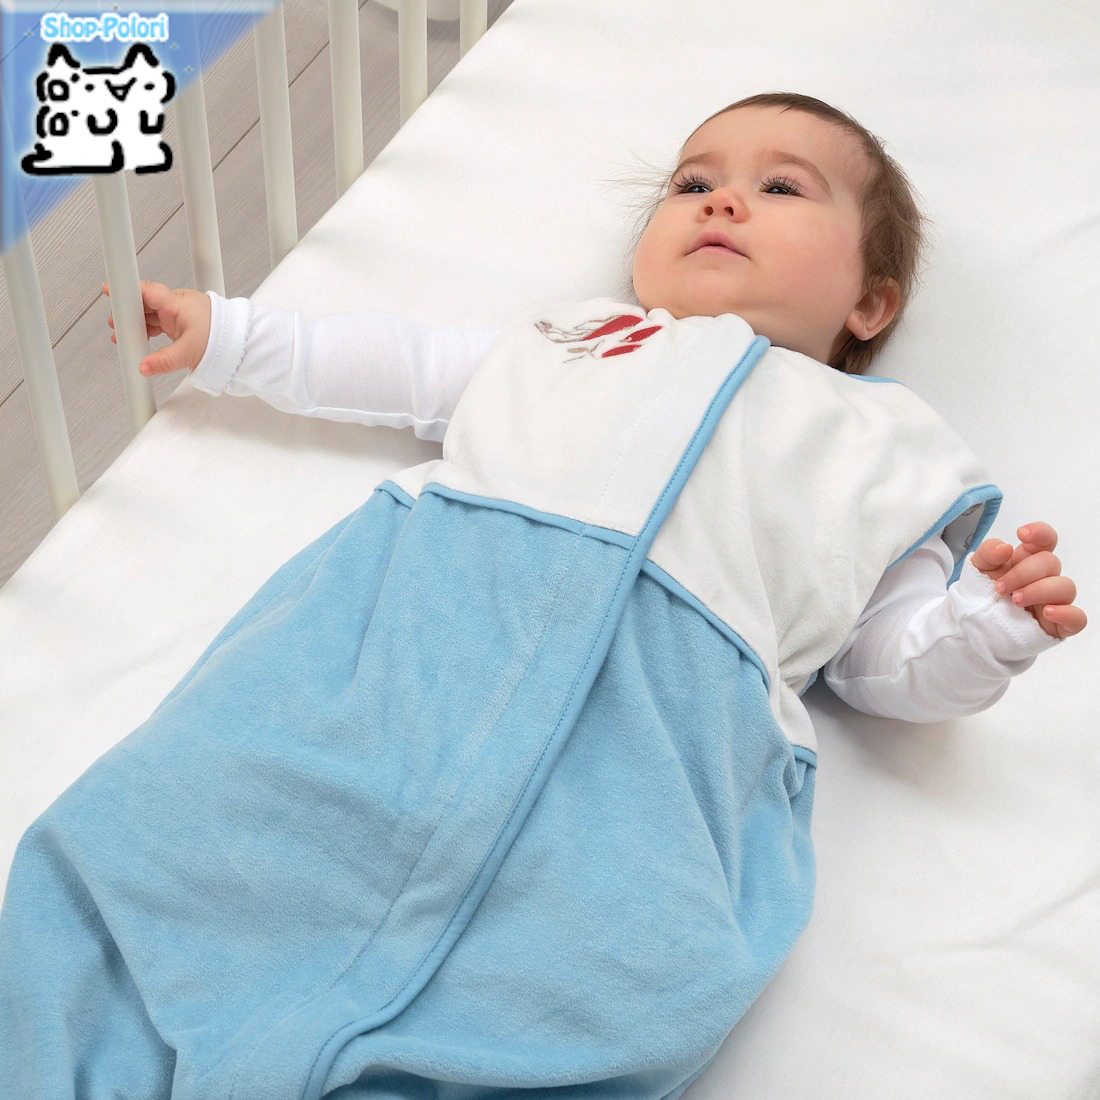 【IKEA Original】RODHAKE -ロードハーケ- ベビー 寝袋 ブルー 月齢6-18カ月用画像